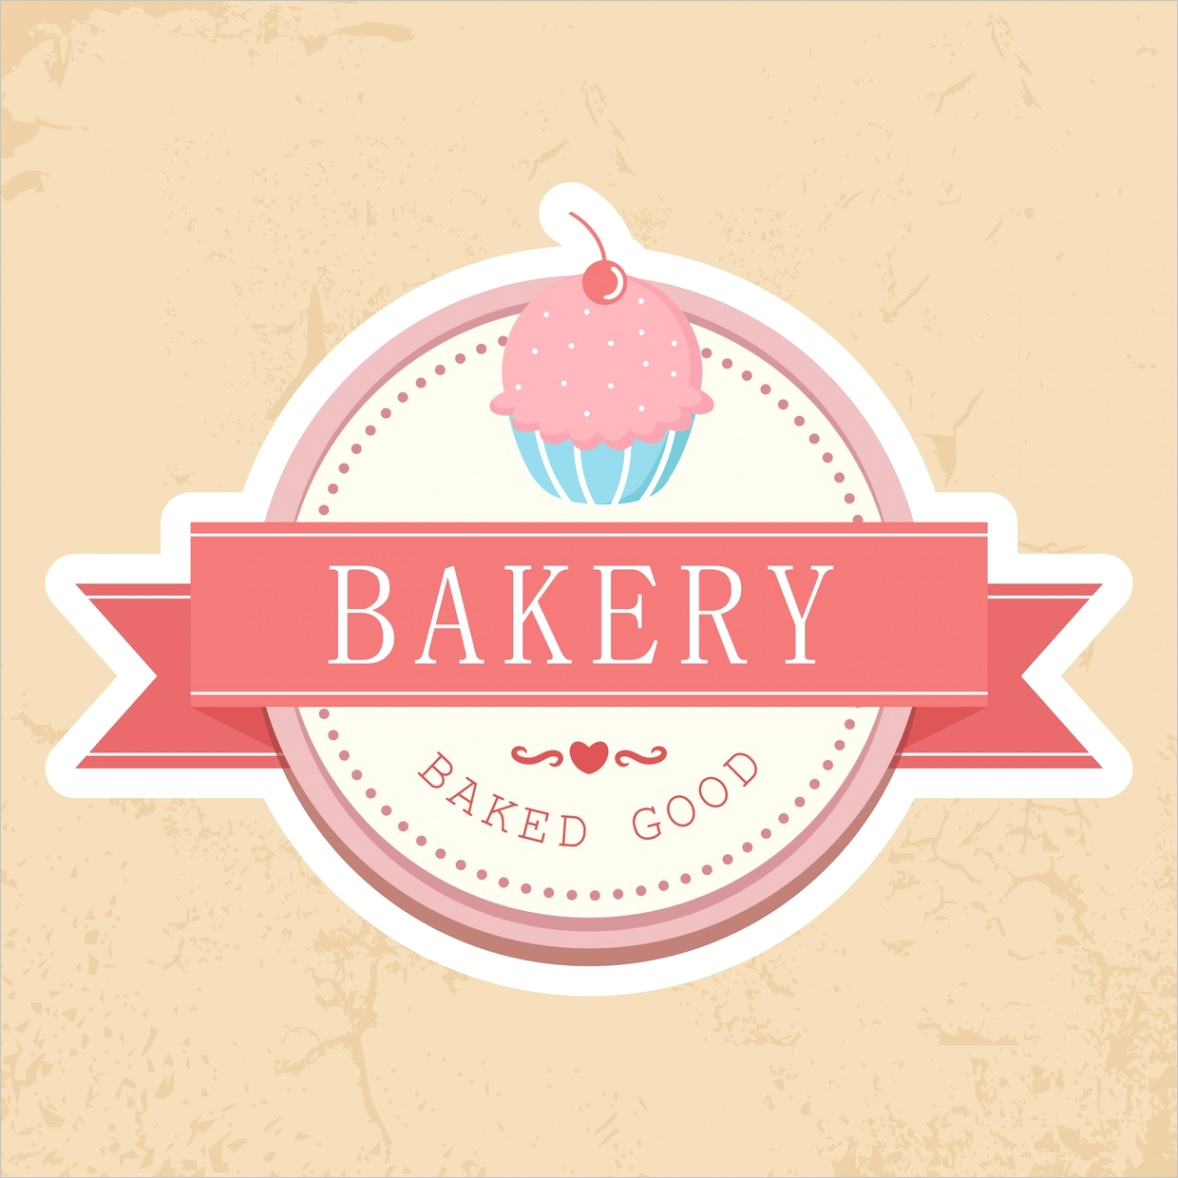 bakery business plan template